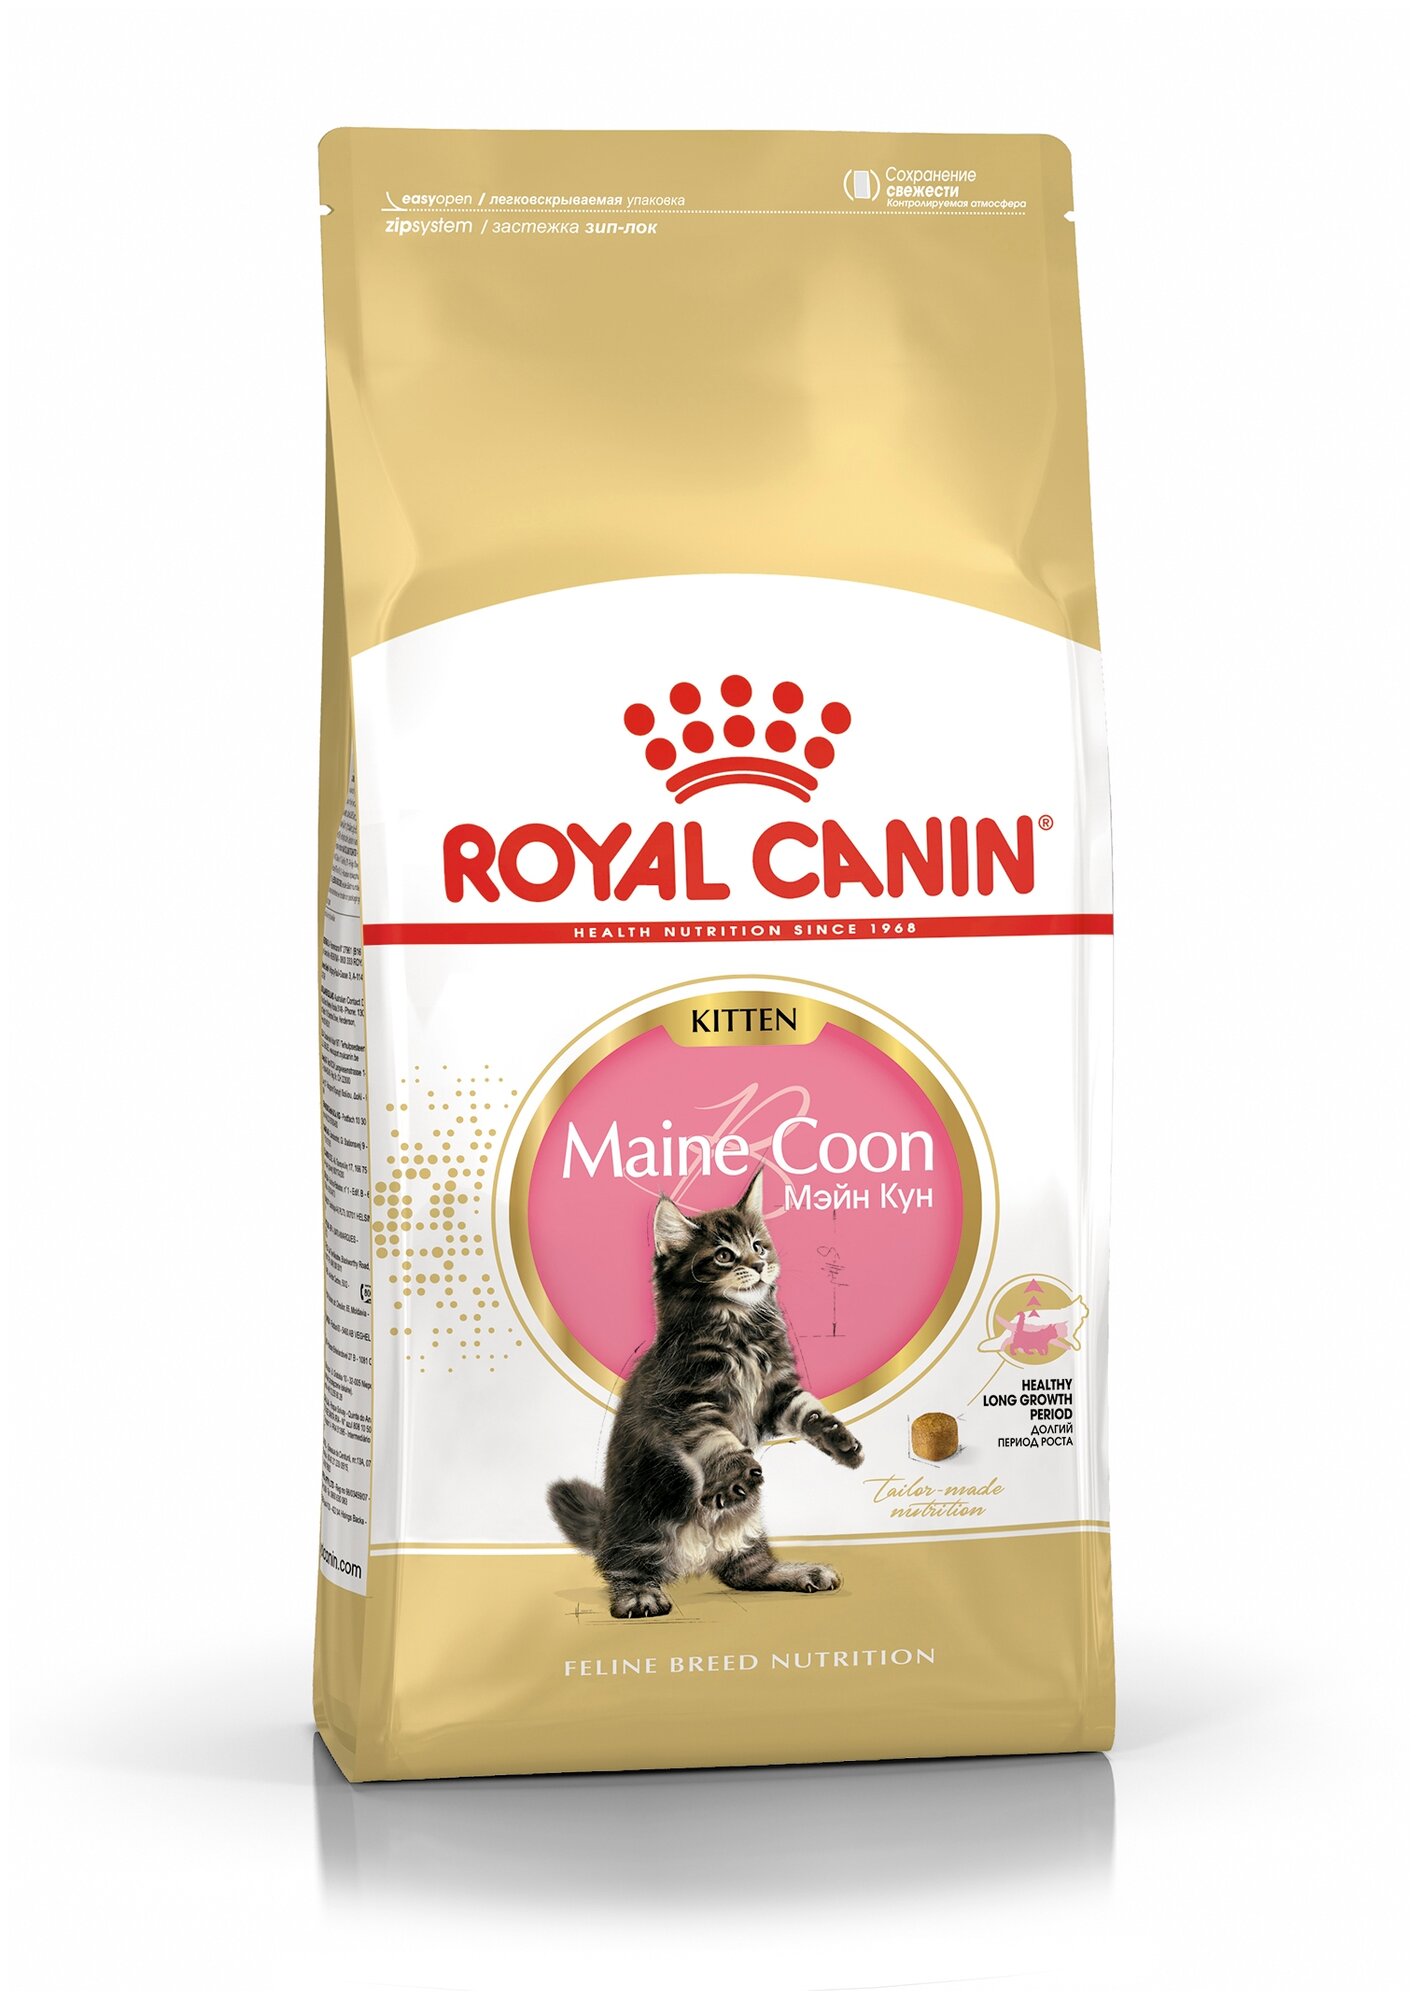 ROYAL CANIN MAINE COON KITTEN 36 для котят мэйн кун (2 кг) - фотография № 2